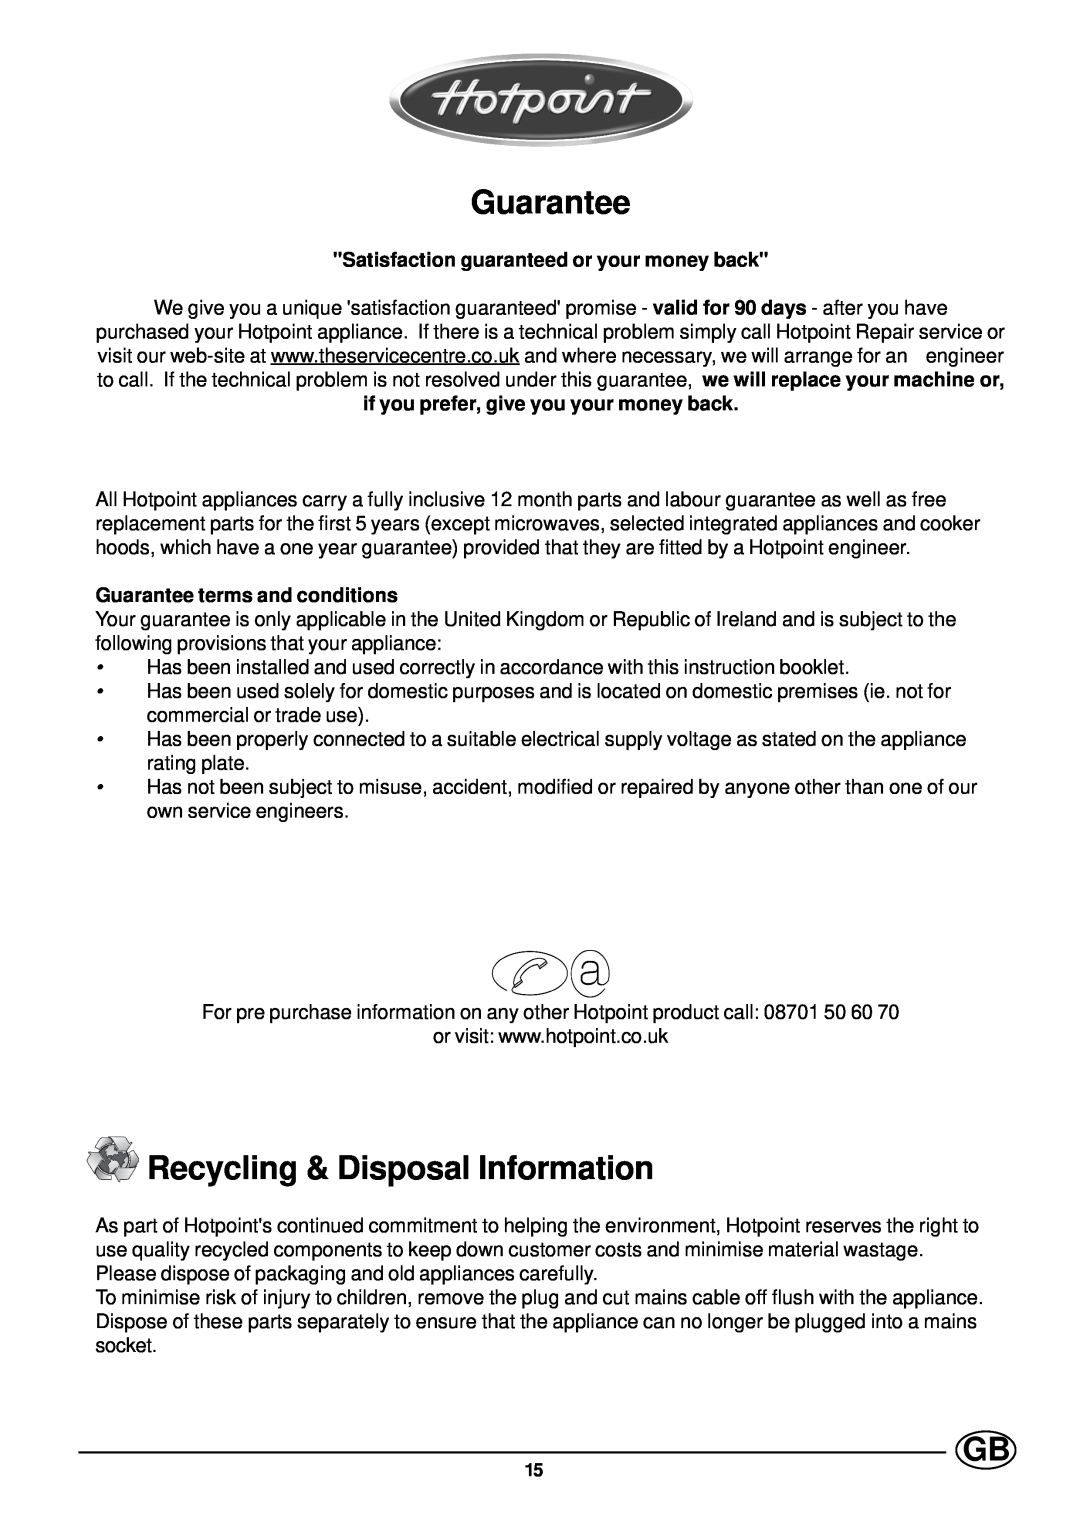 Hotpoint GX901X manual Guarantee, Recycling & Disposal Information, Satisfaction guaranteed or your money back 